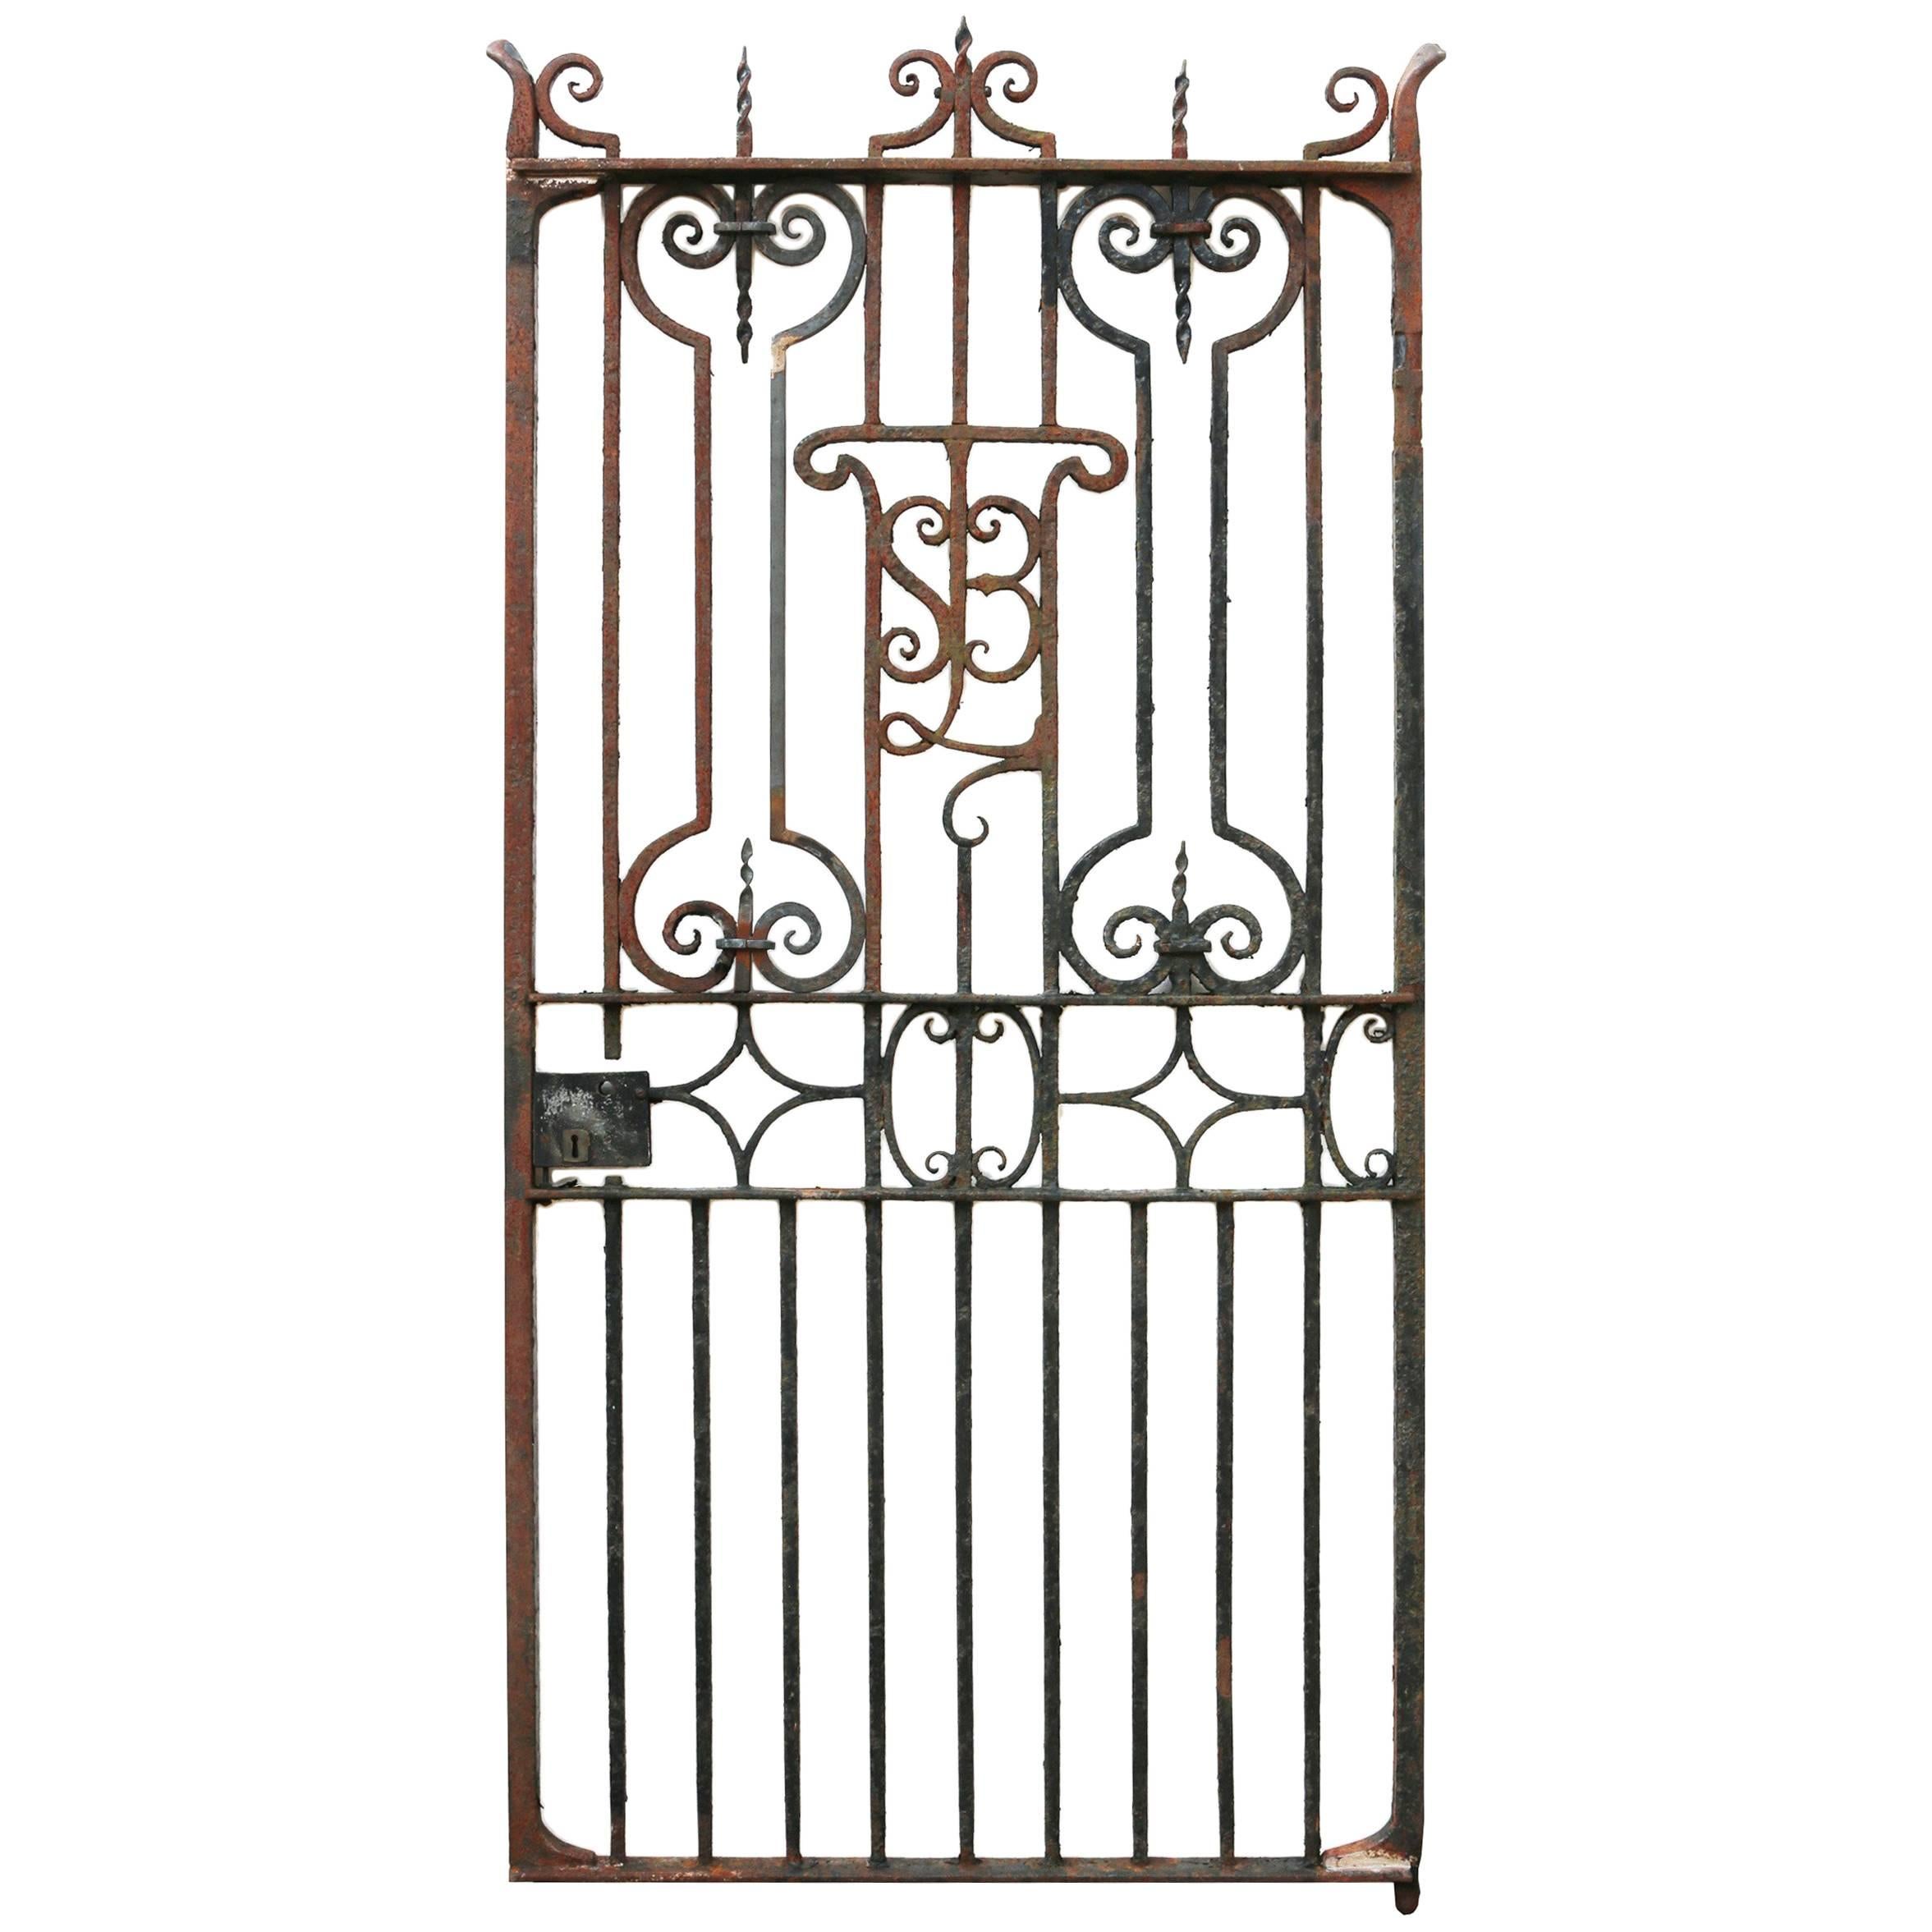 19th Century English Wrought Iron Gates